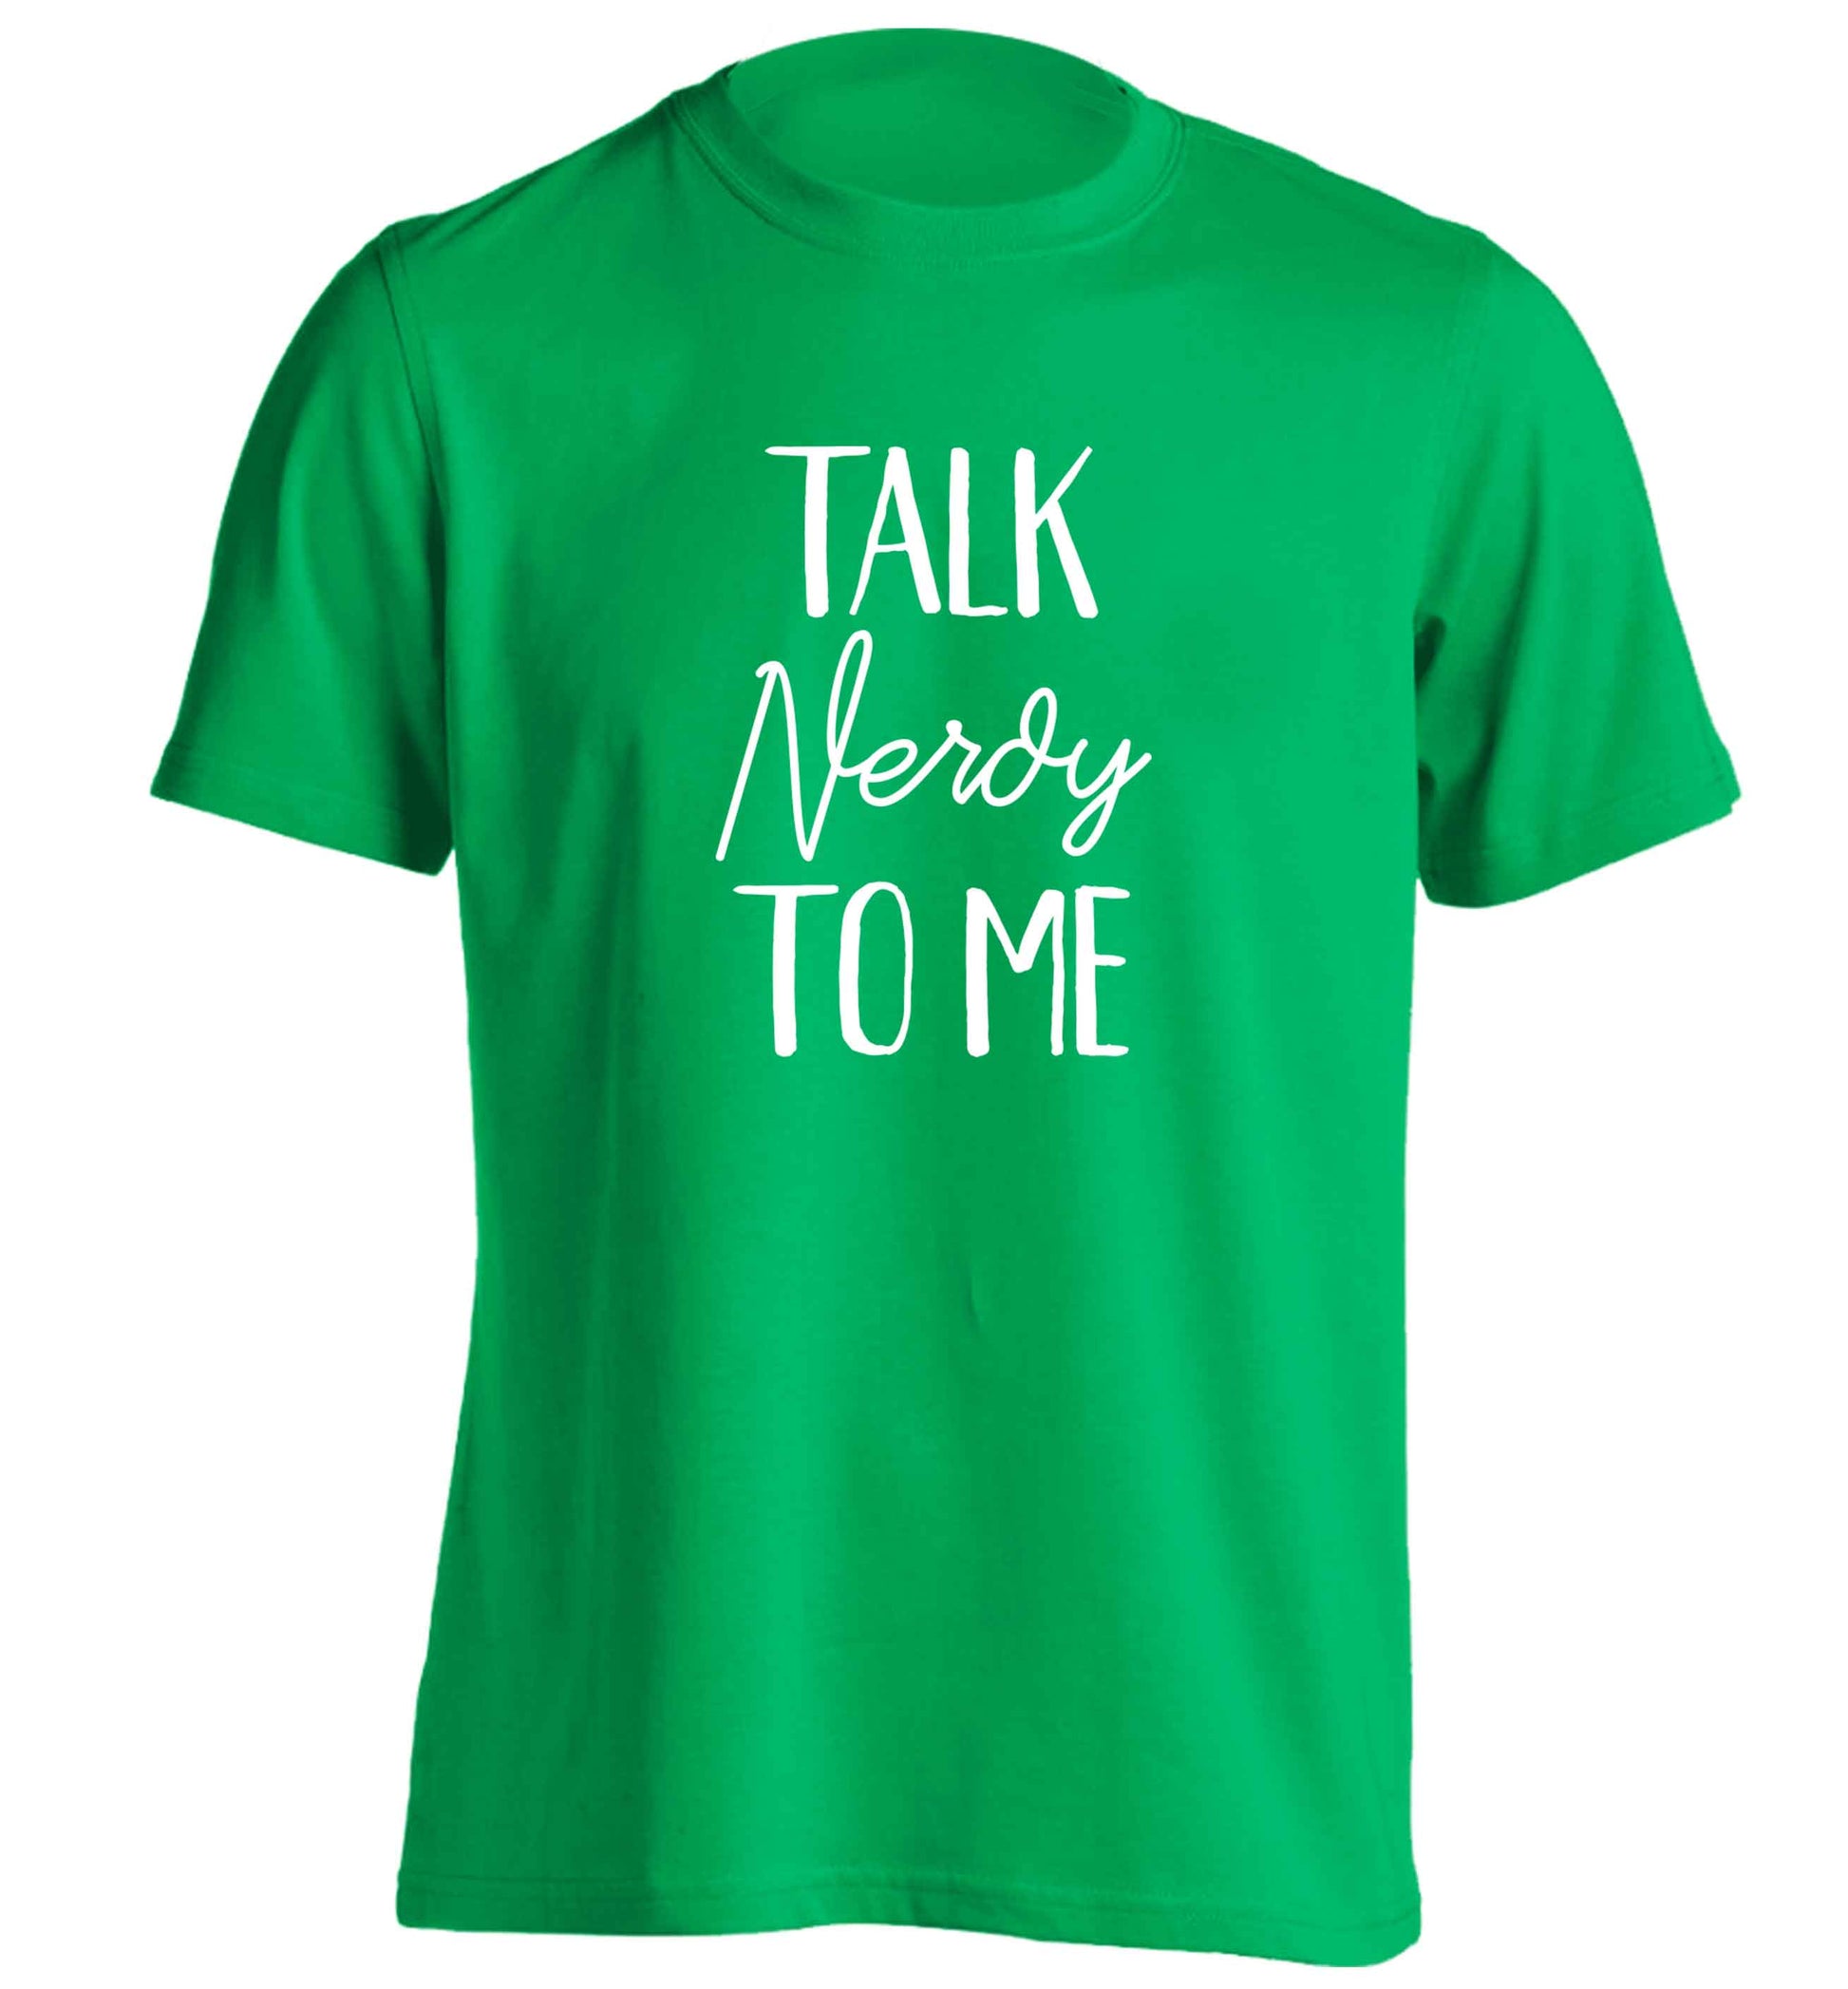 Talk nerdy to me adults unisex green Tshirt 2XL